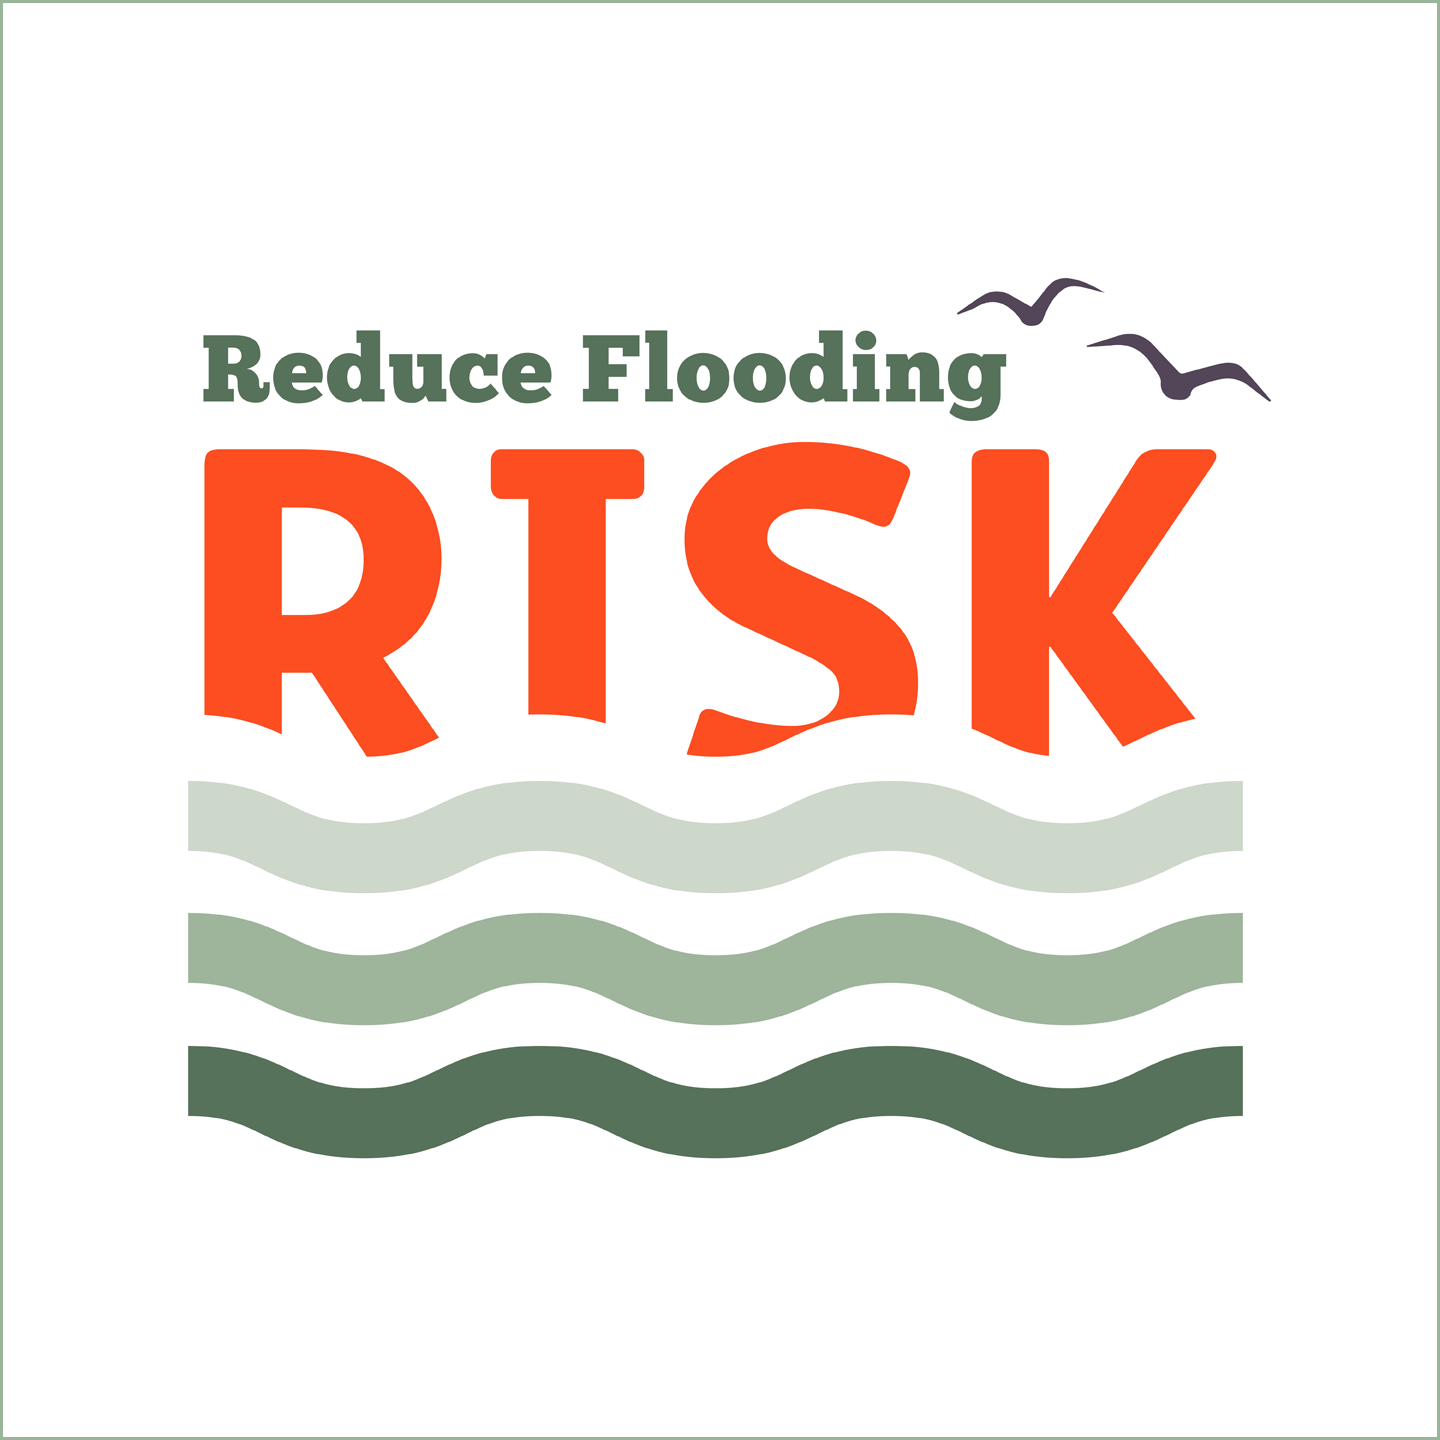 Reduce flooding risks